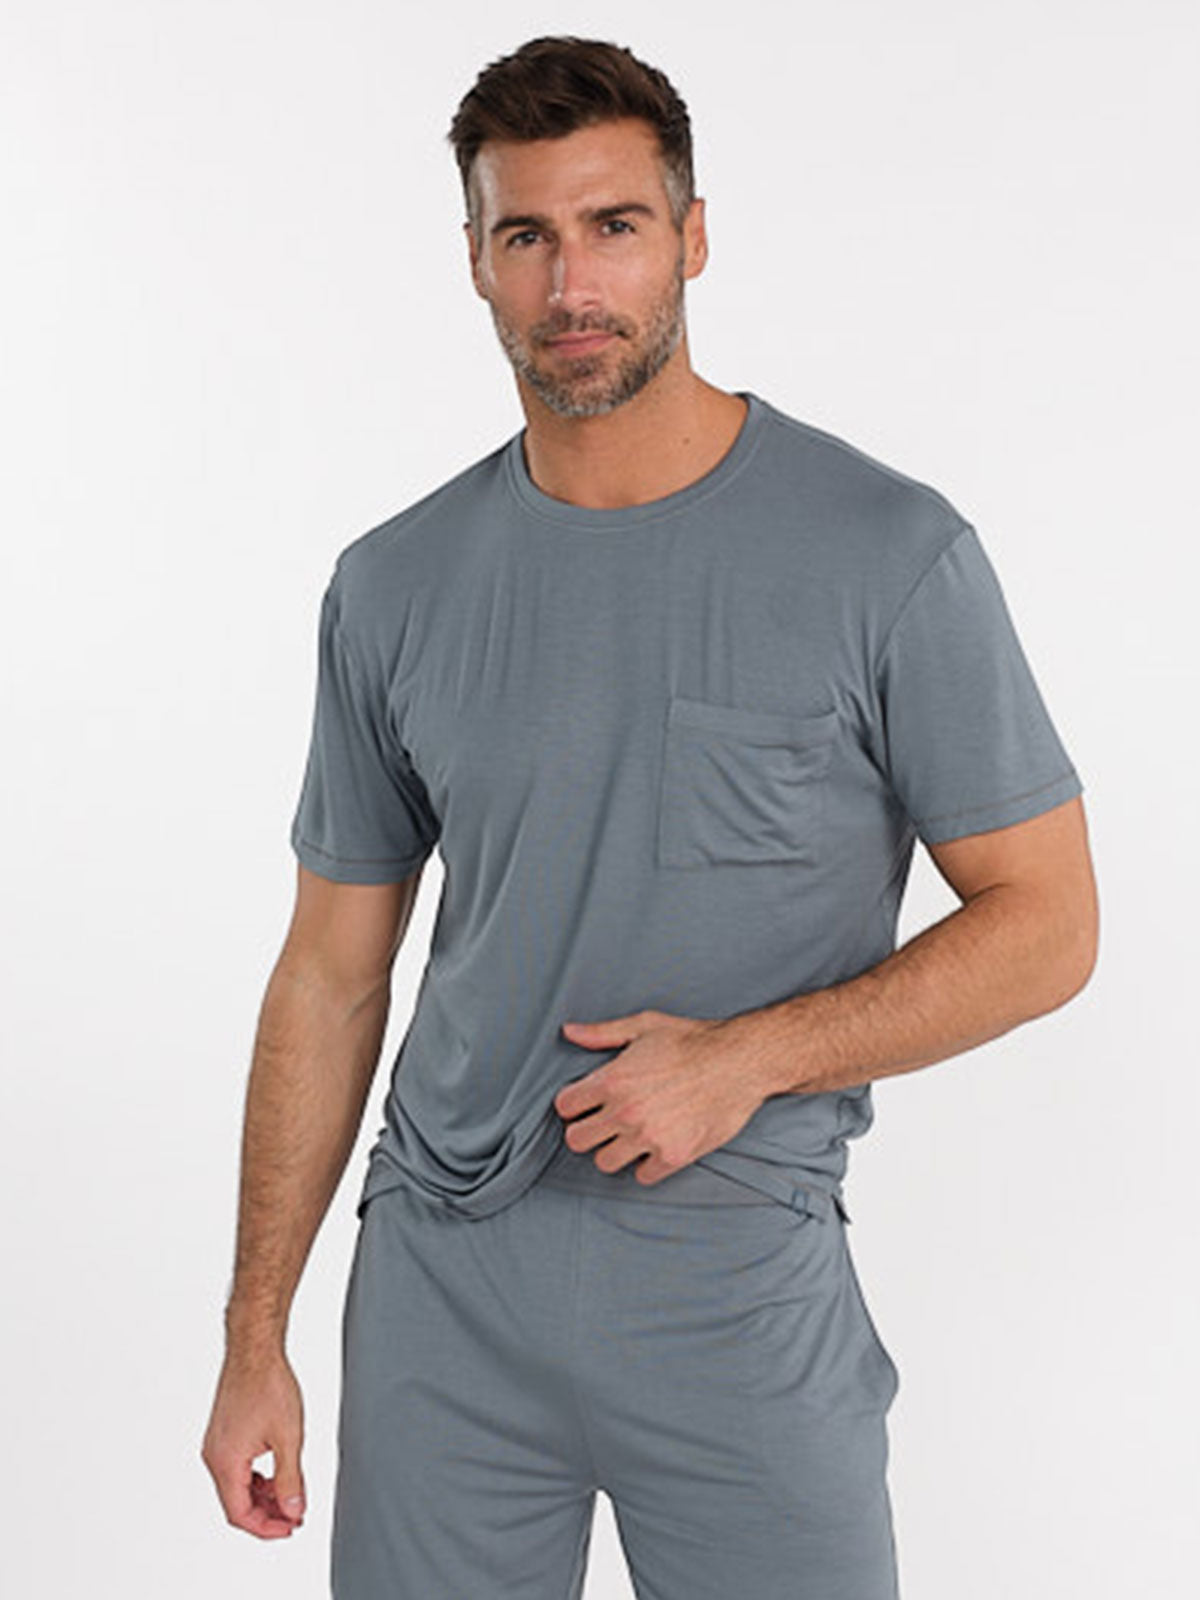 tasc Men's Sleep Shirts: Bamboo Silk Short Sleeve Sleep Shirt - Size S in Storm - tasc Performance